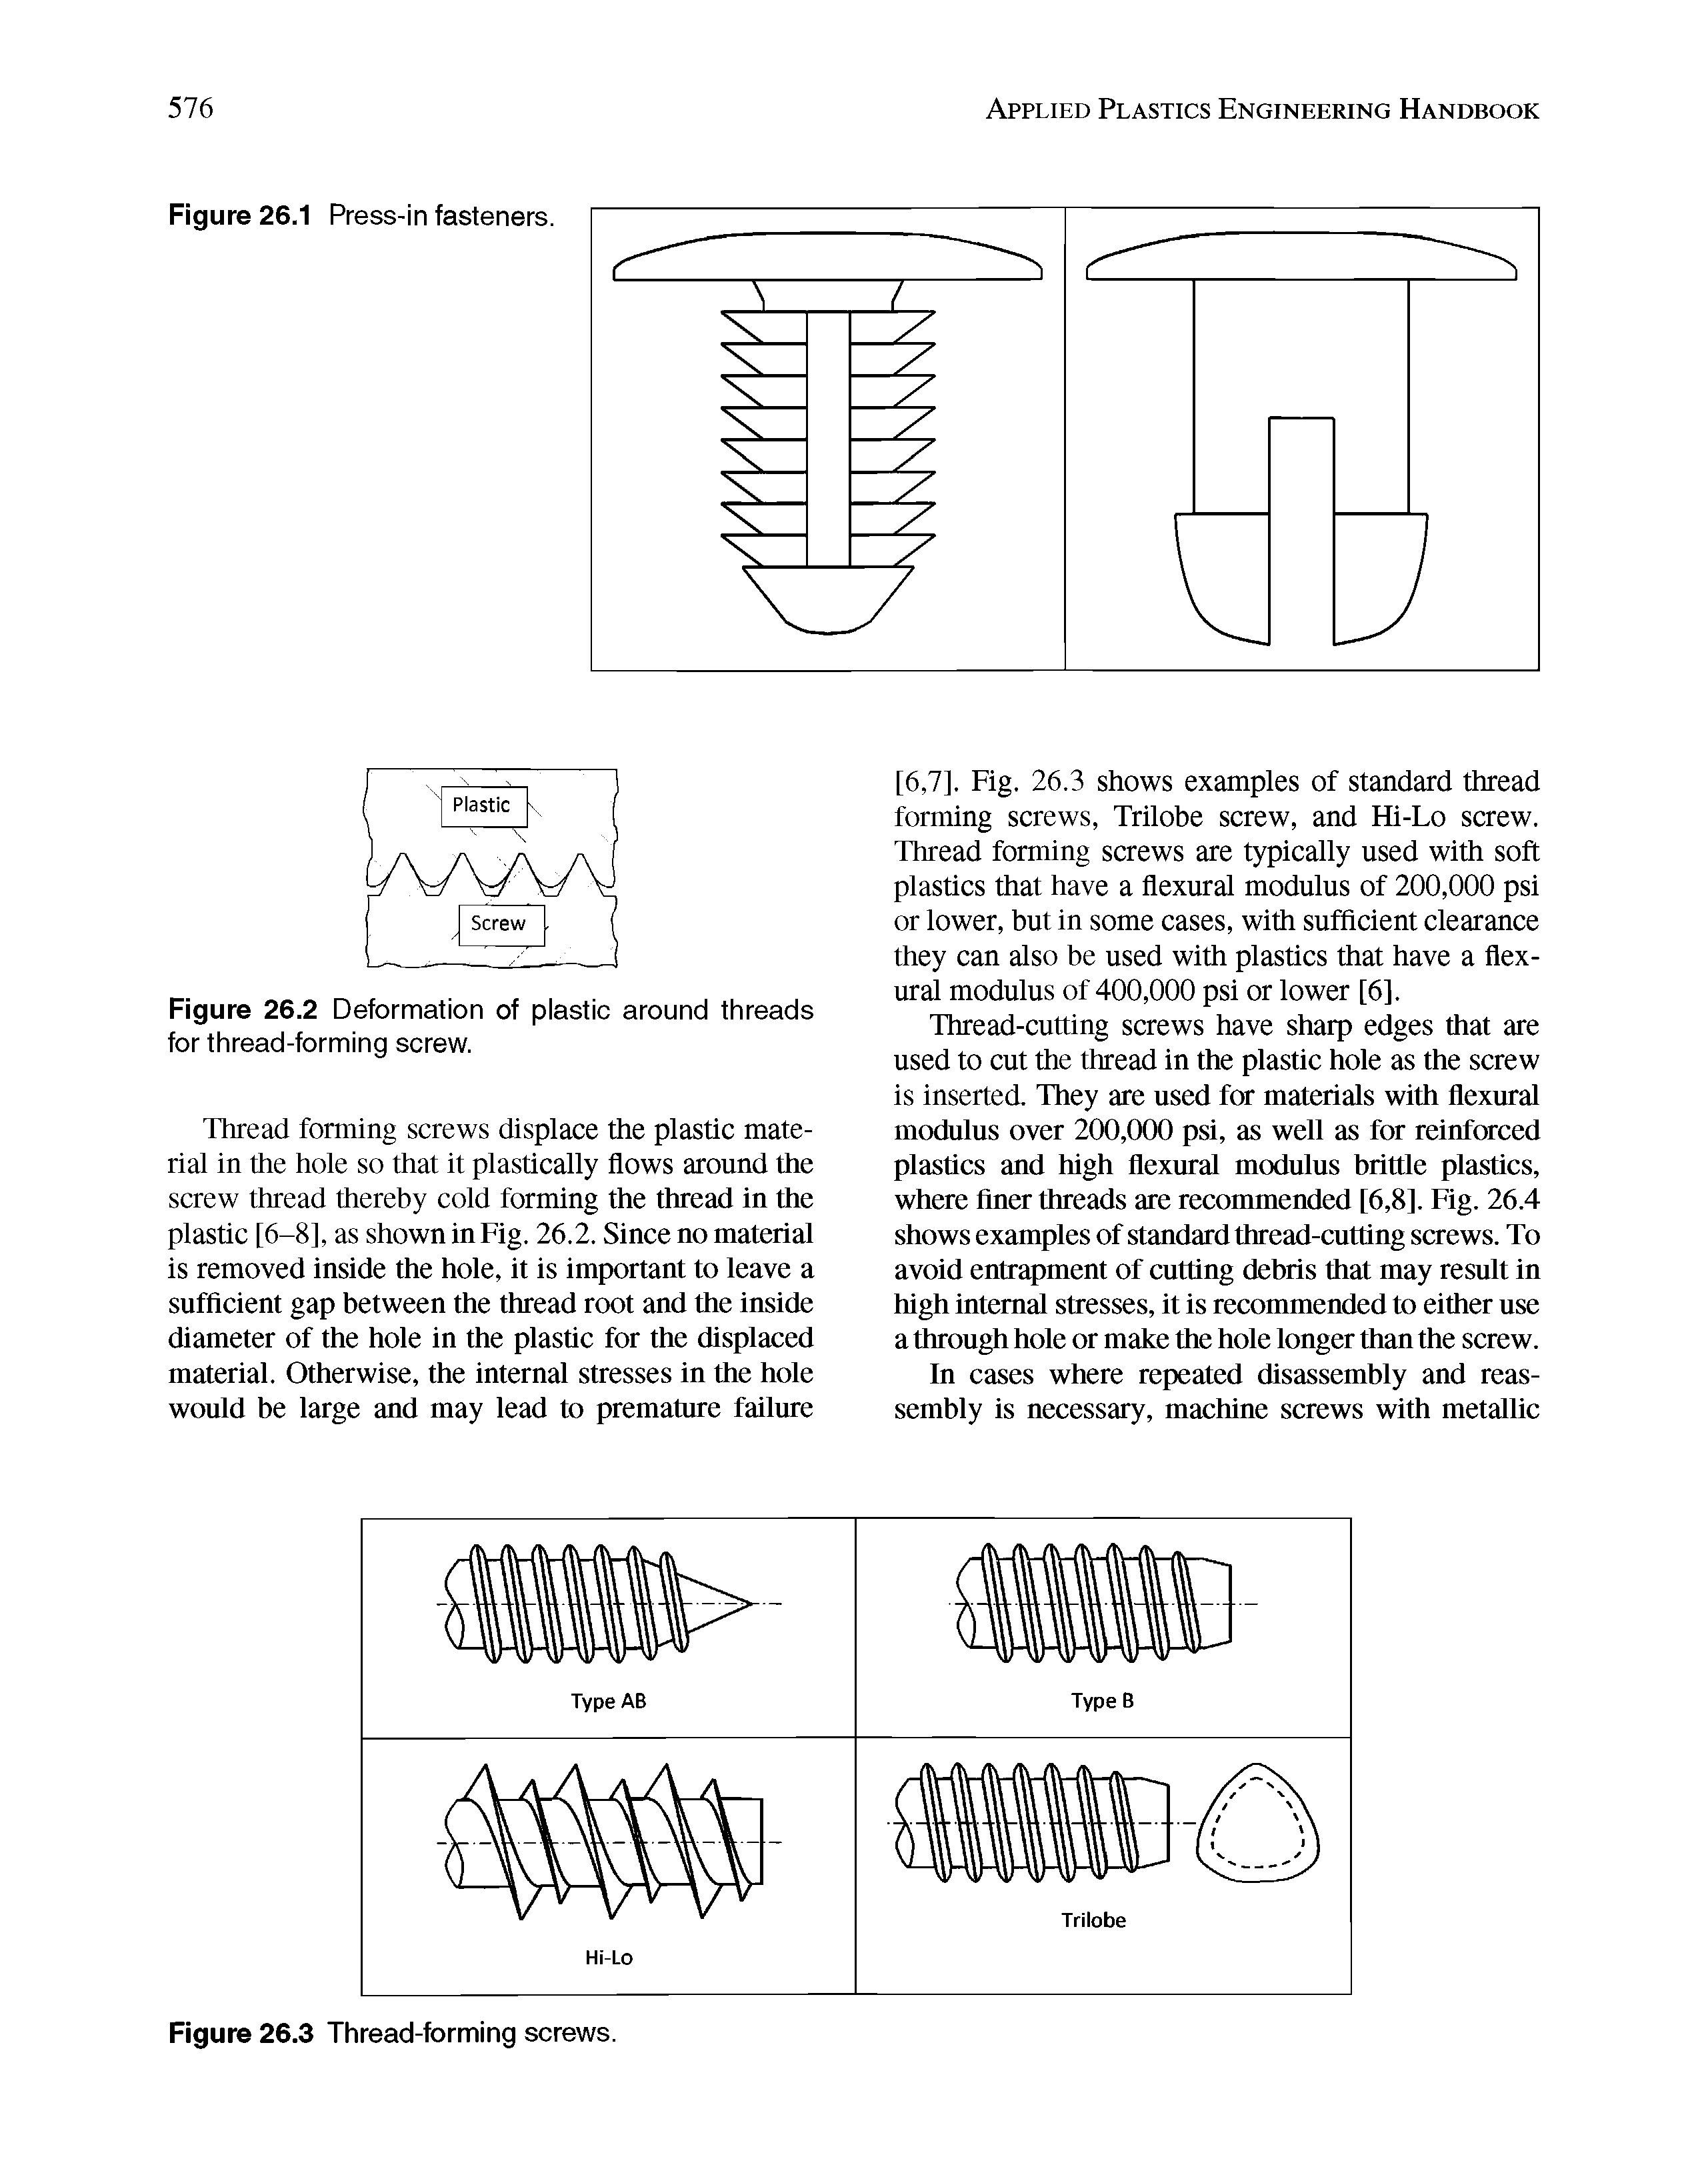 Figure 26.2 Deformation of plastic around threads for thread-forming screw.